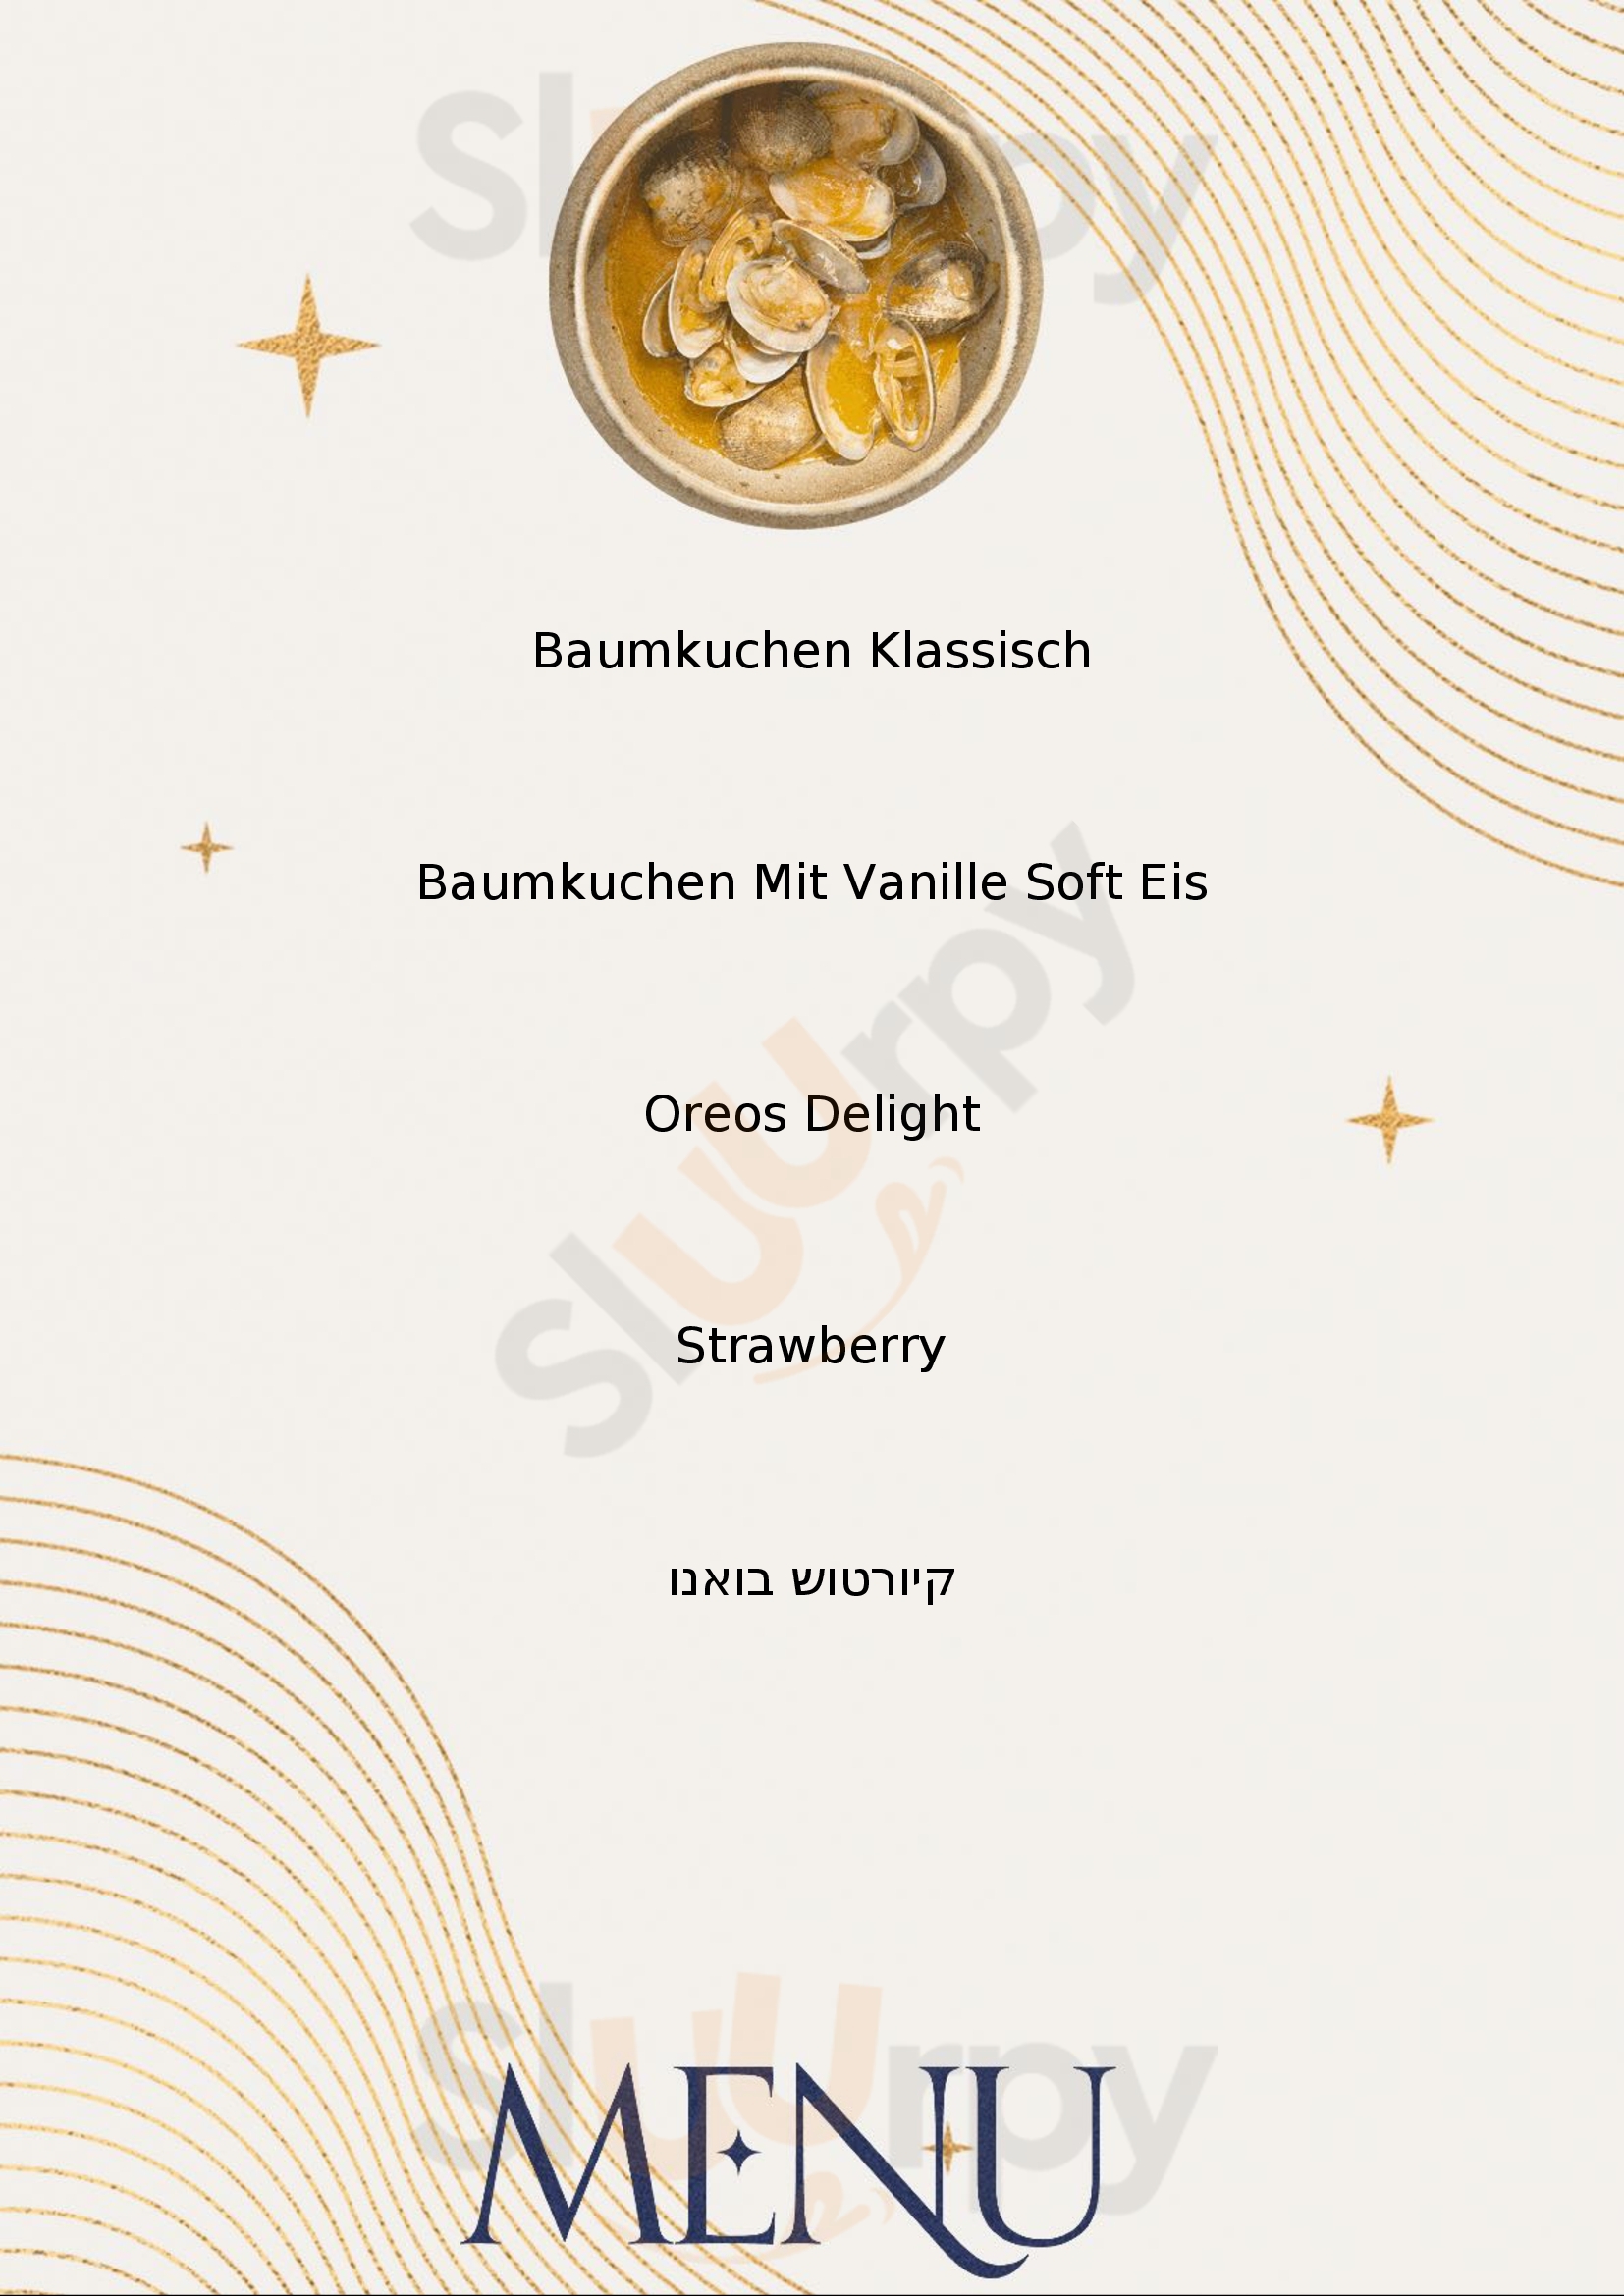 Hefi Baumkuchen & Bubble Waffle Shop Wien Menu - 1